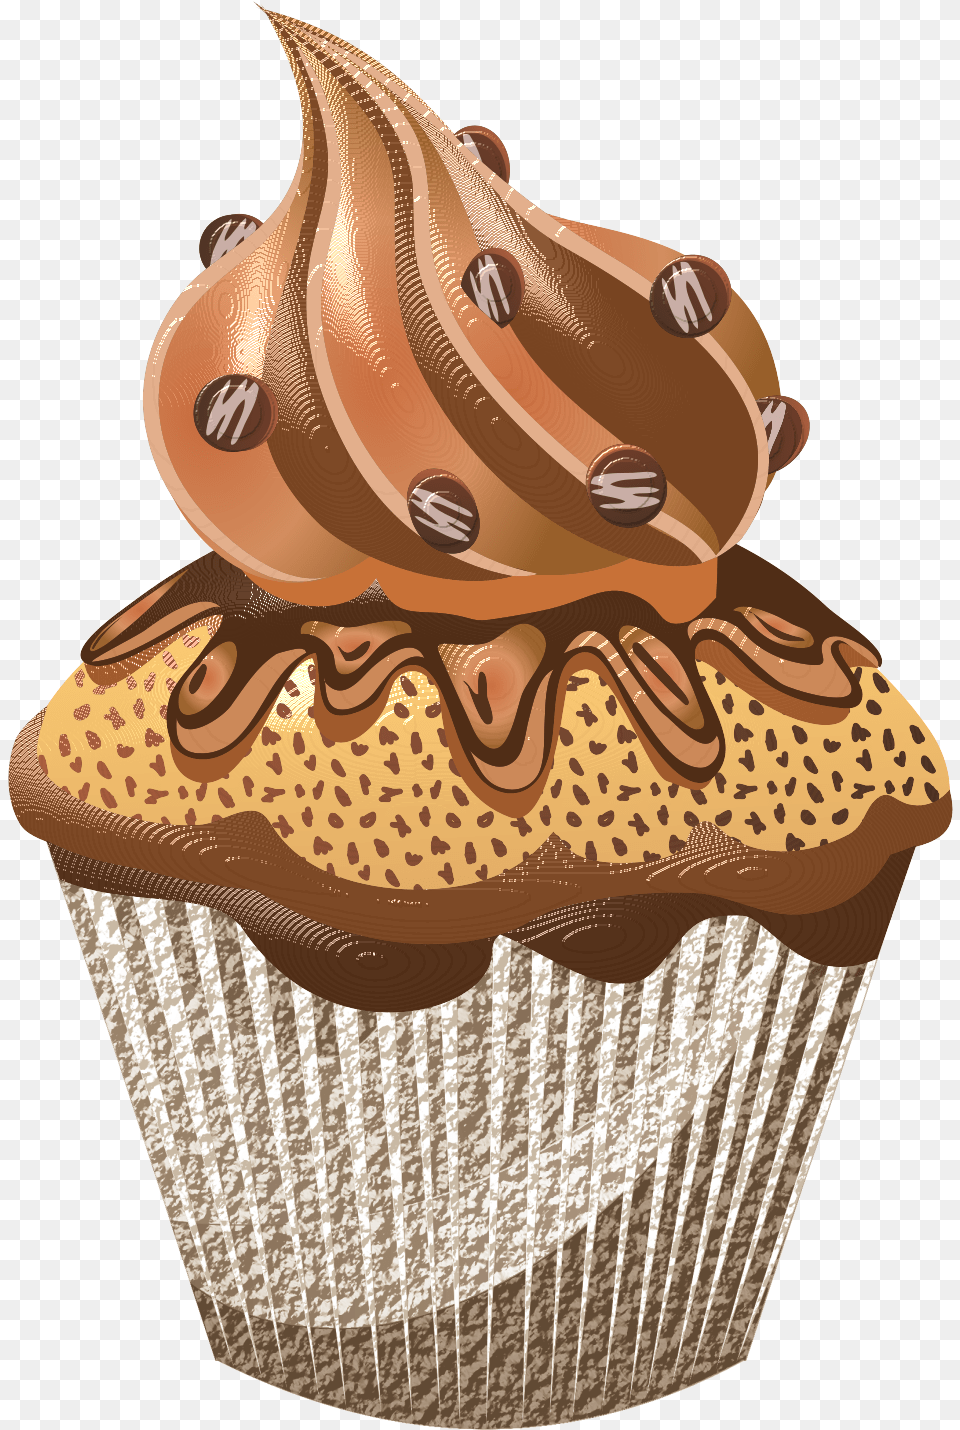 Cupcake Cupcake Clipart, Cake, Cream, Dessert, Food Free Png